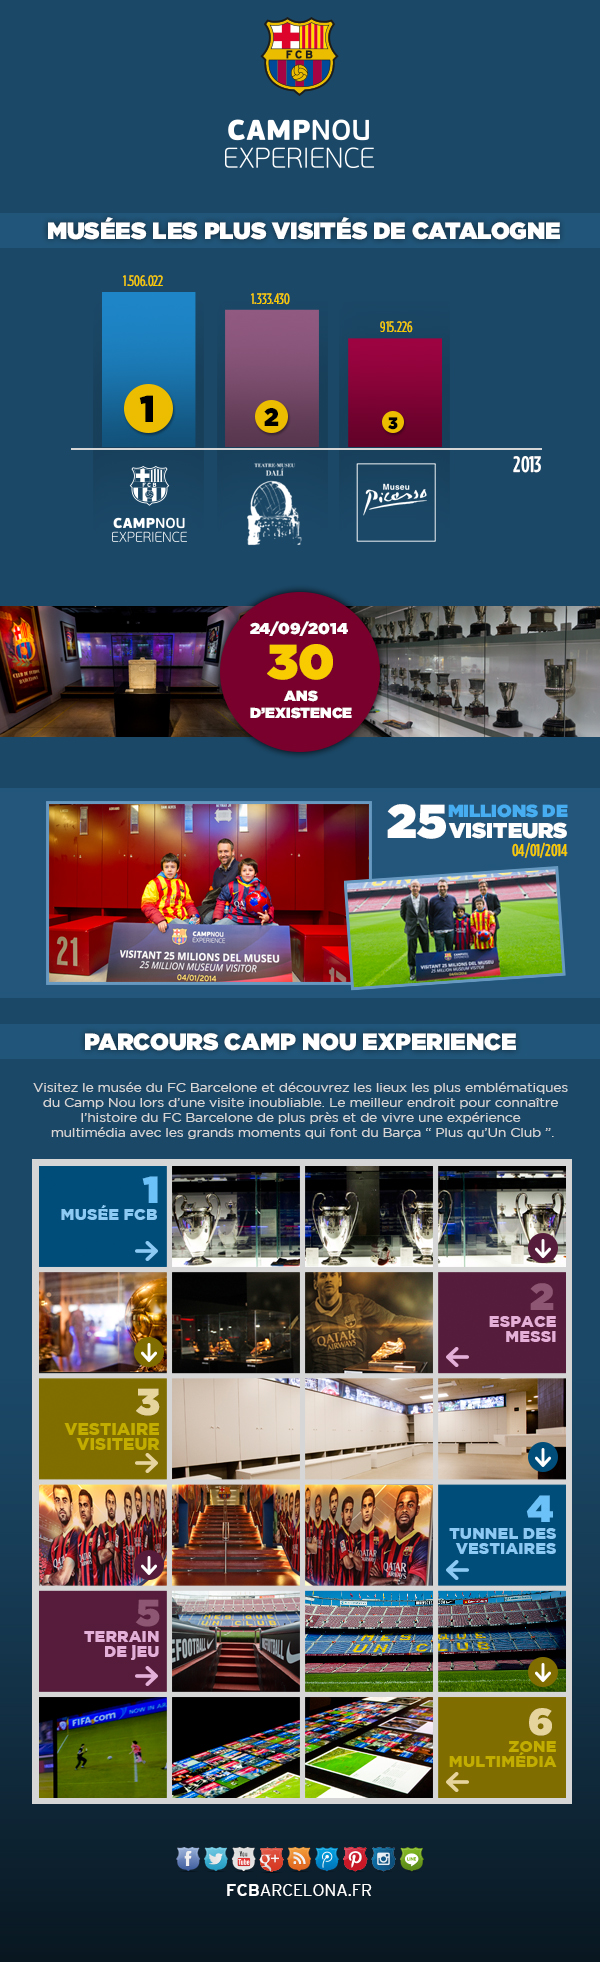 camp nou experience musée fc barcelone 2013